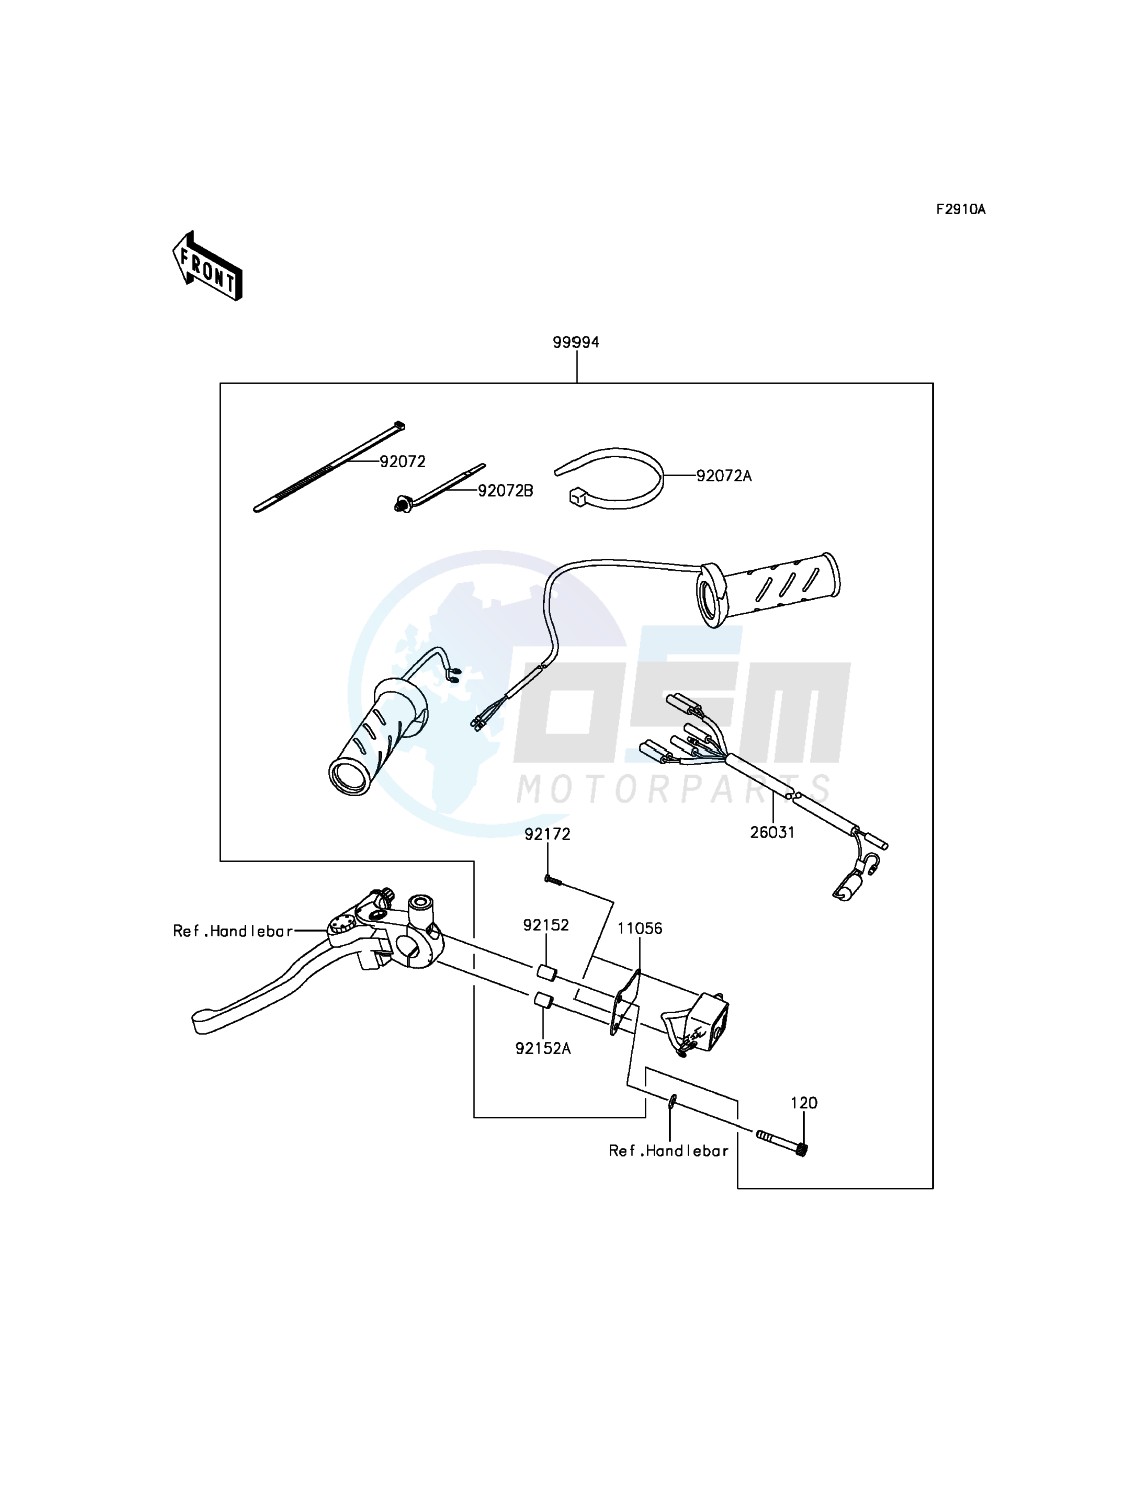 Accessory(Grip Heater) blueprint